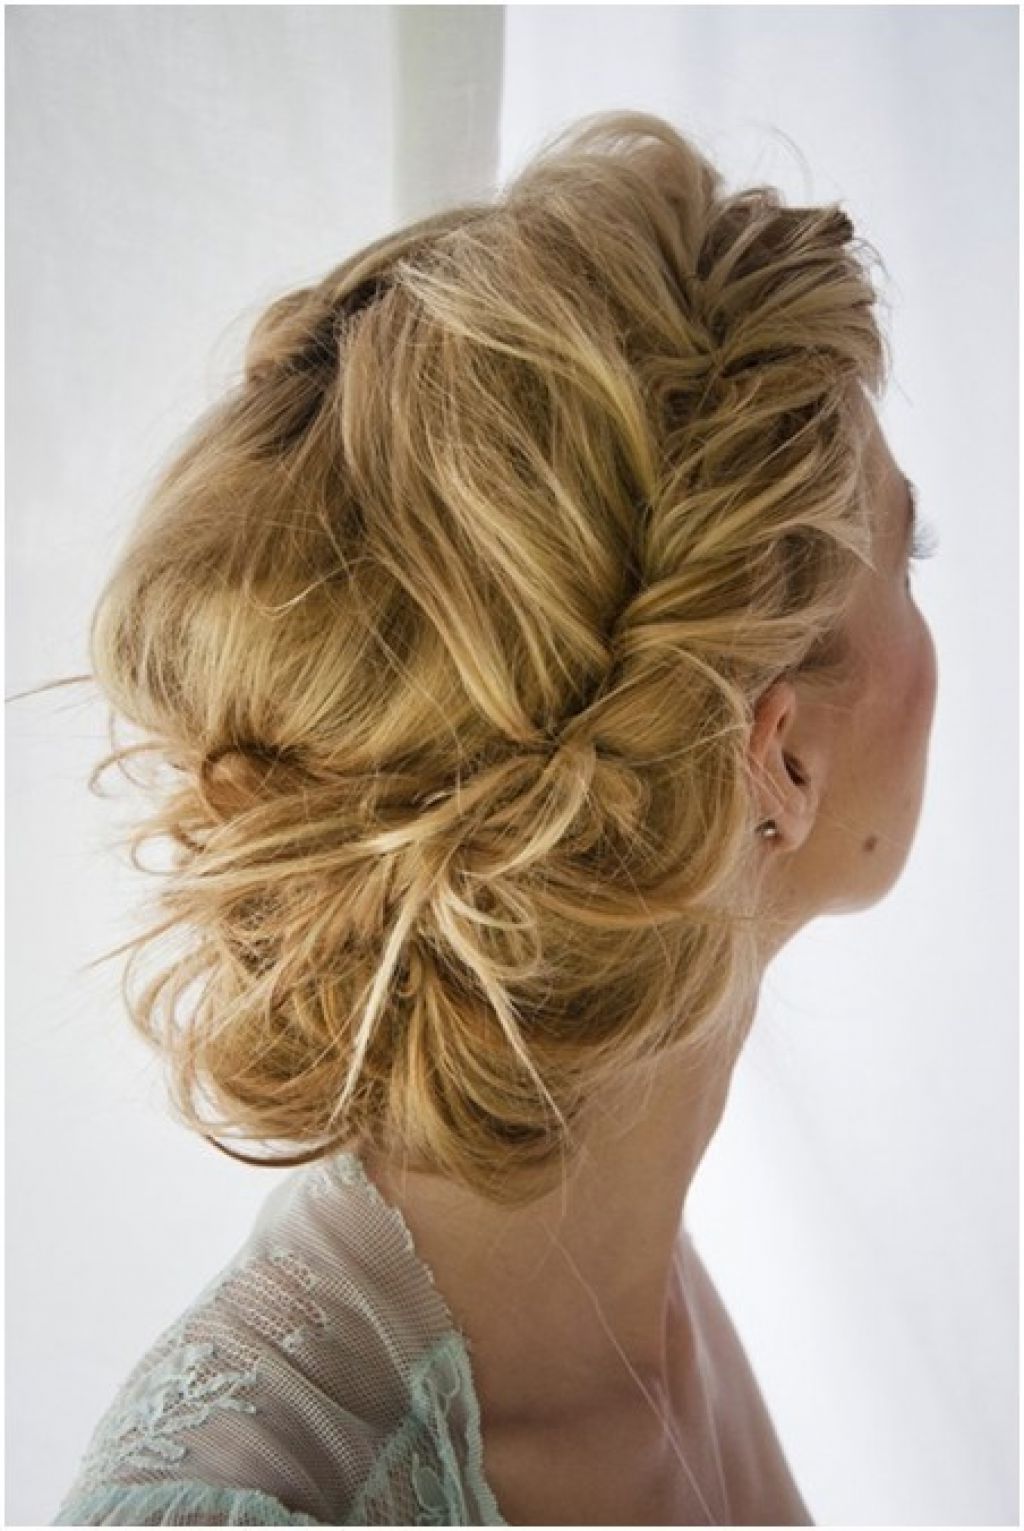 Prom Updo Hairstyles Medium Length Hair – Prom Hairstyles For Pertaining To Prom Updo Hairstyles For Medium Hair (View 13 of 15)